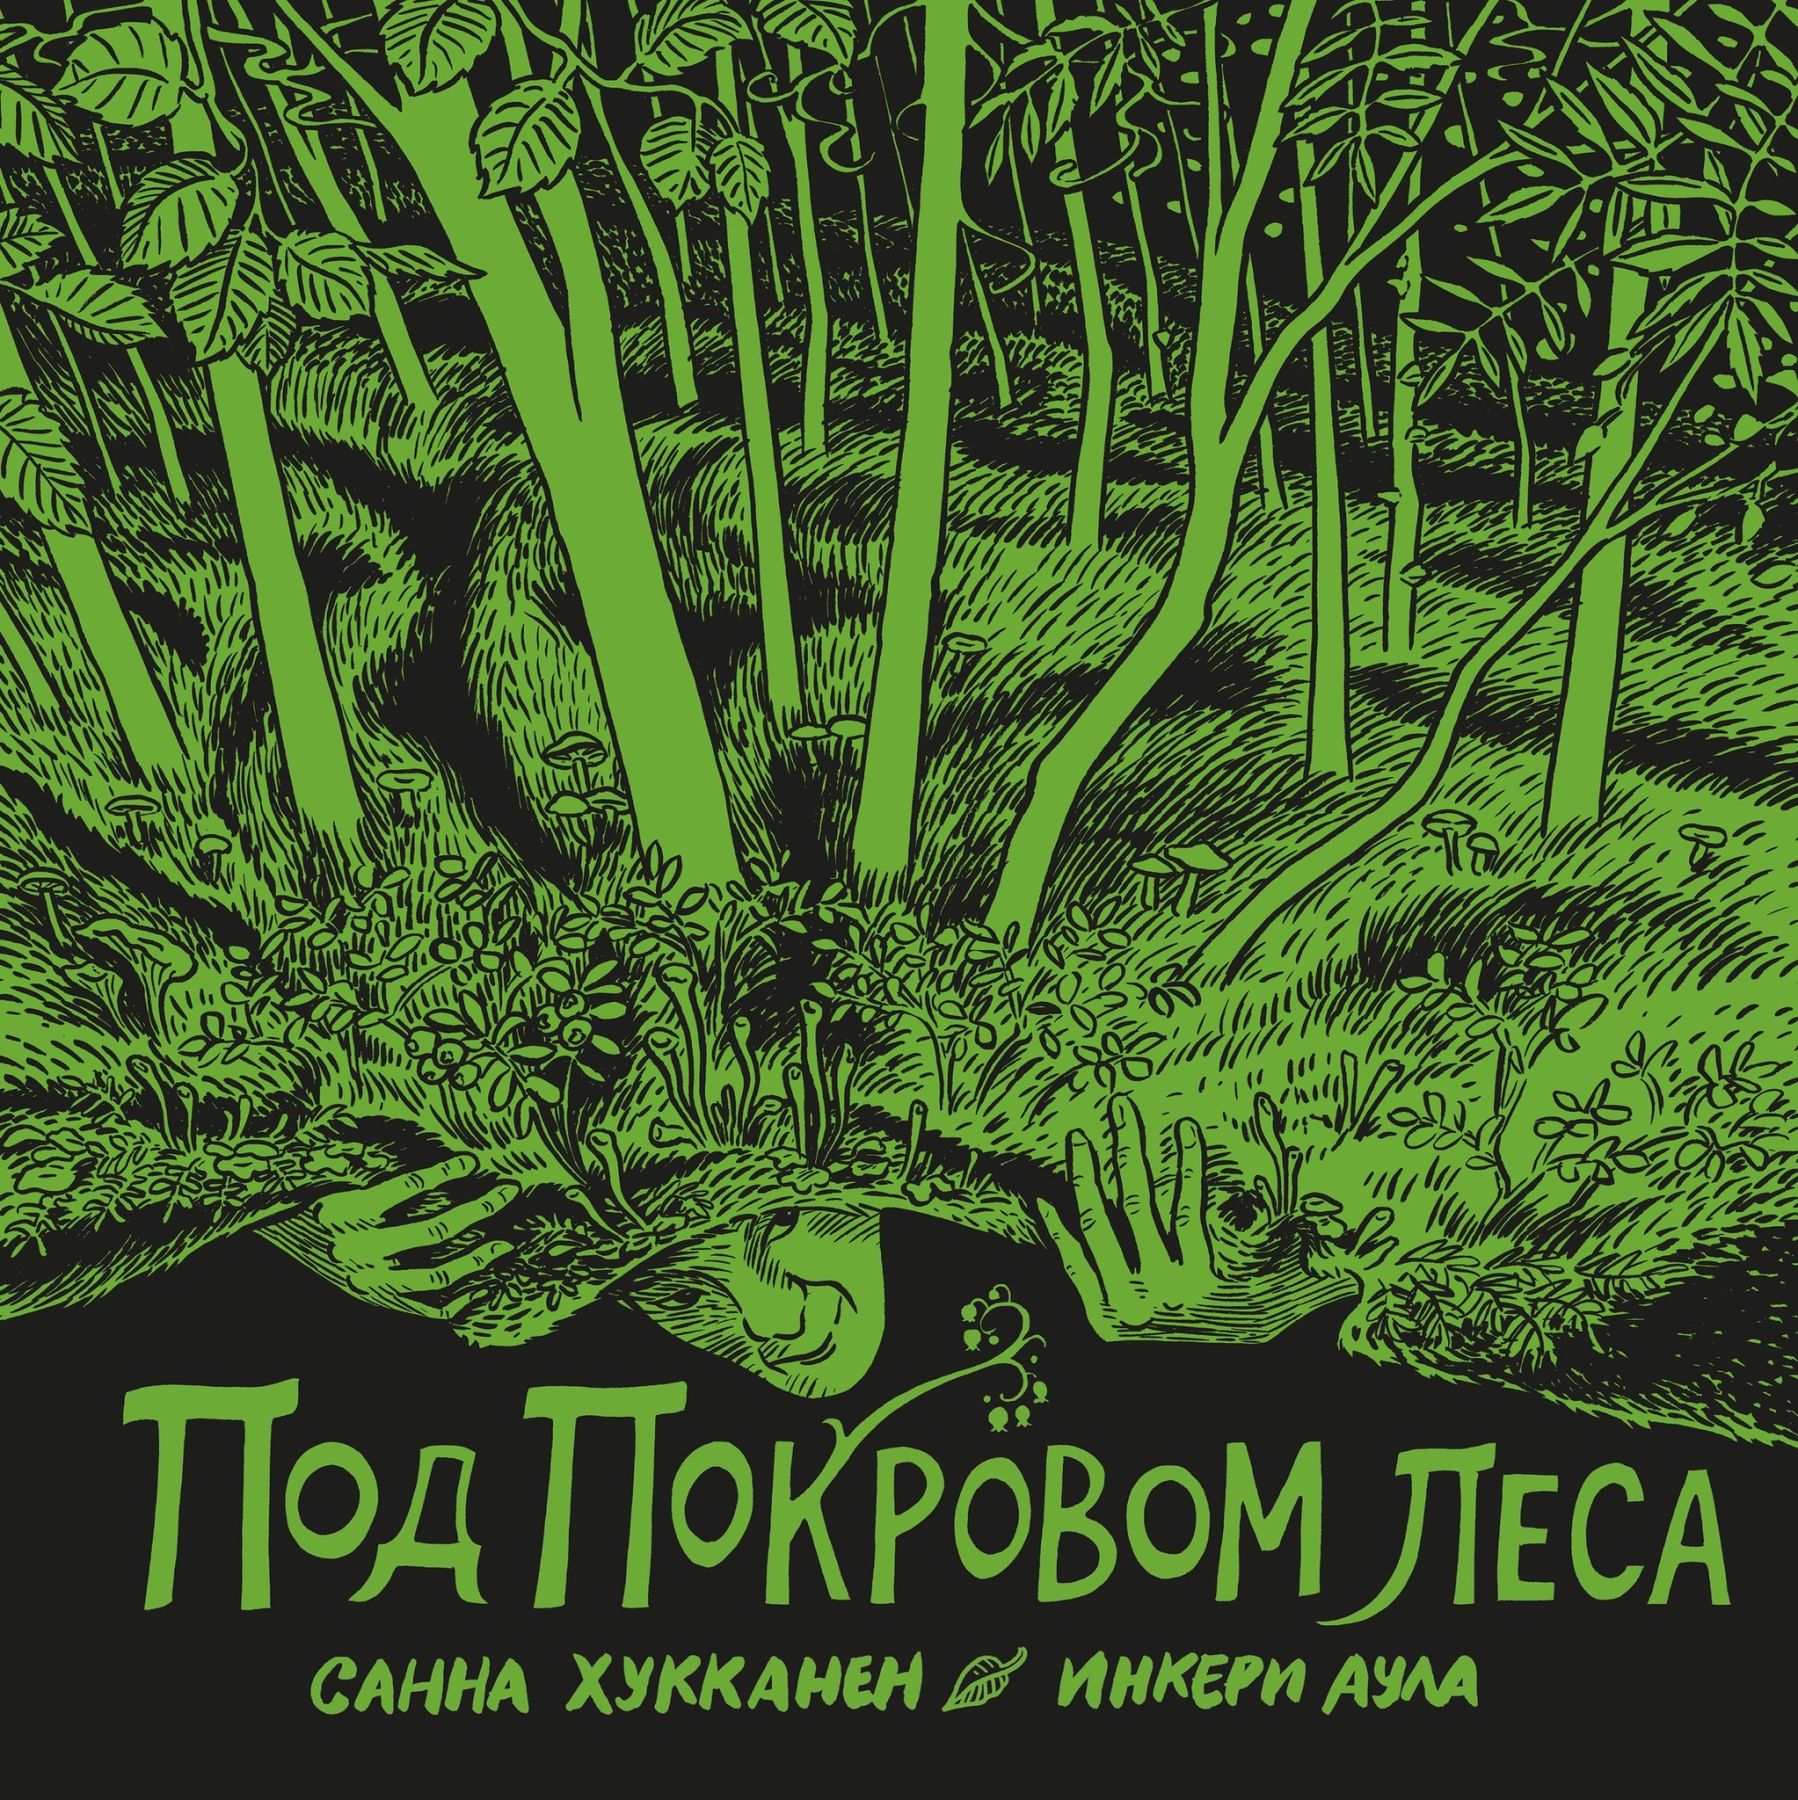 Комикс на русском языке «Под покровом леса»